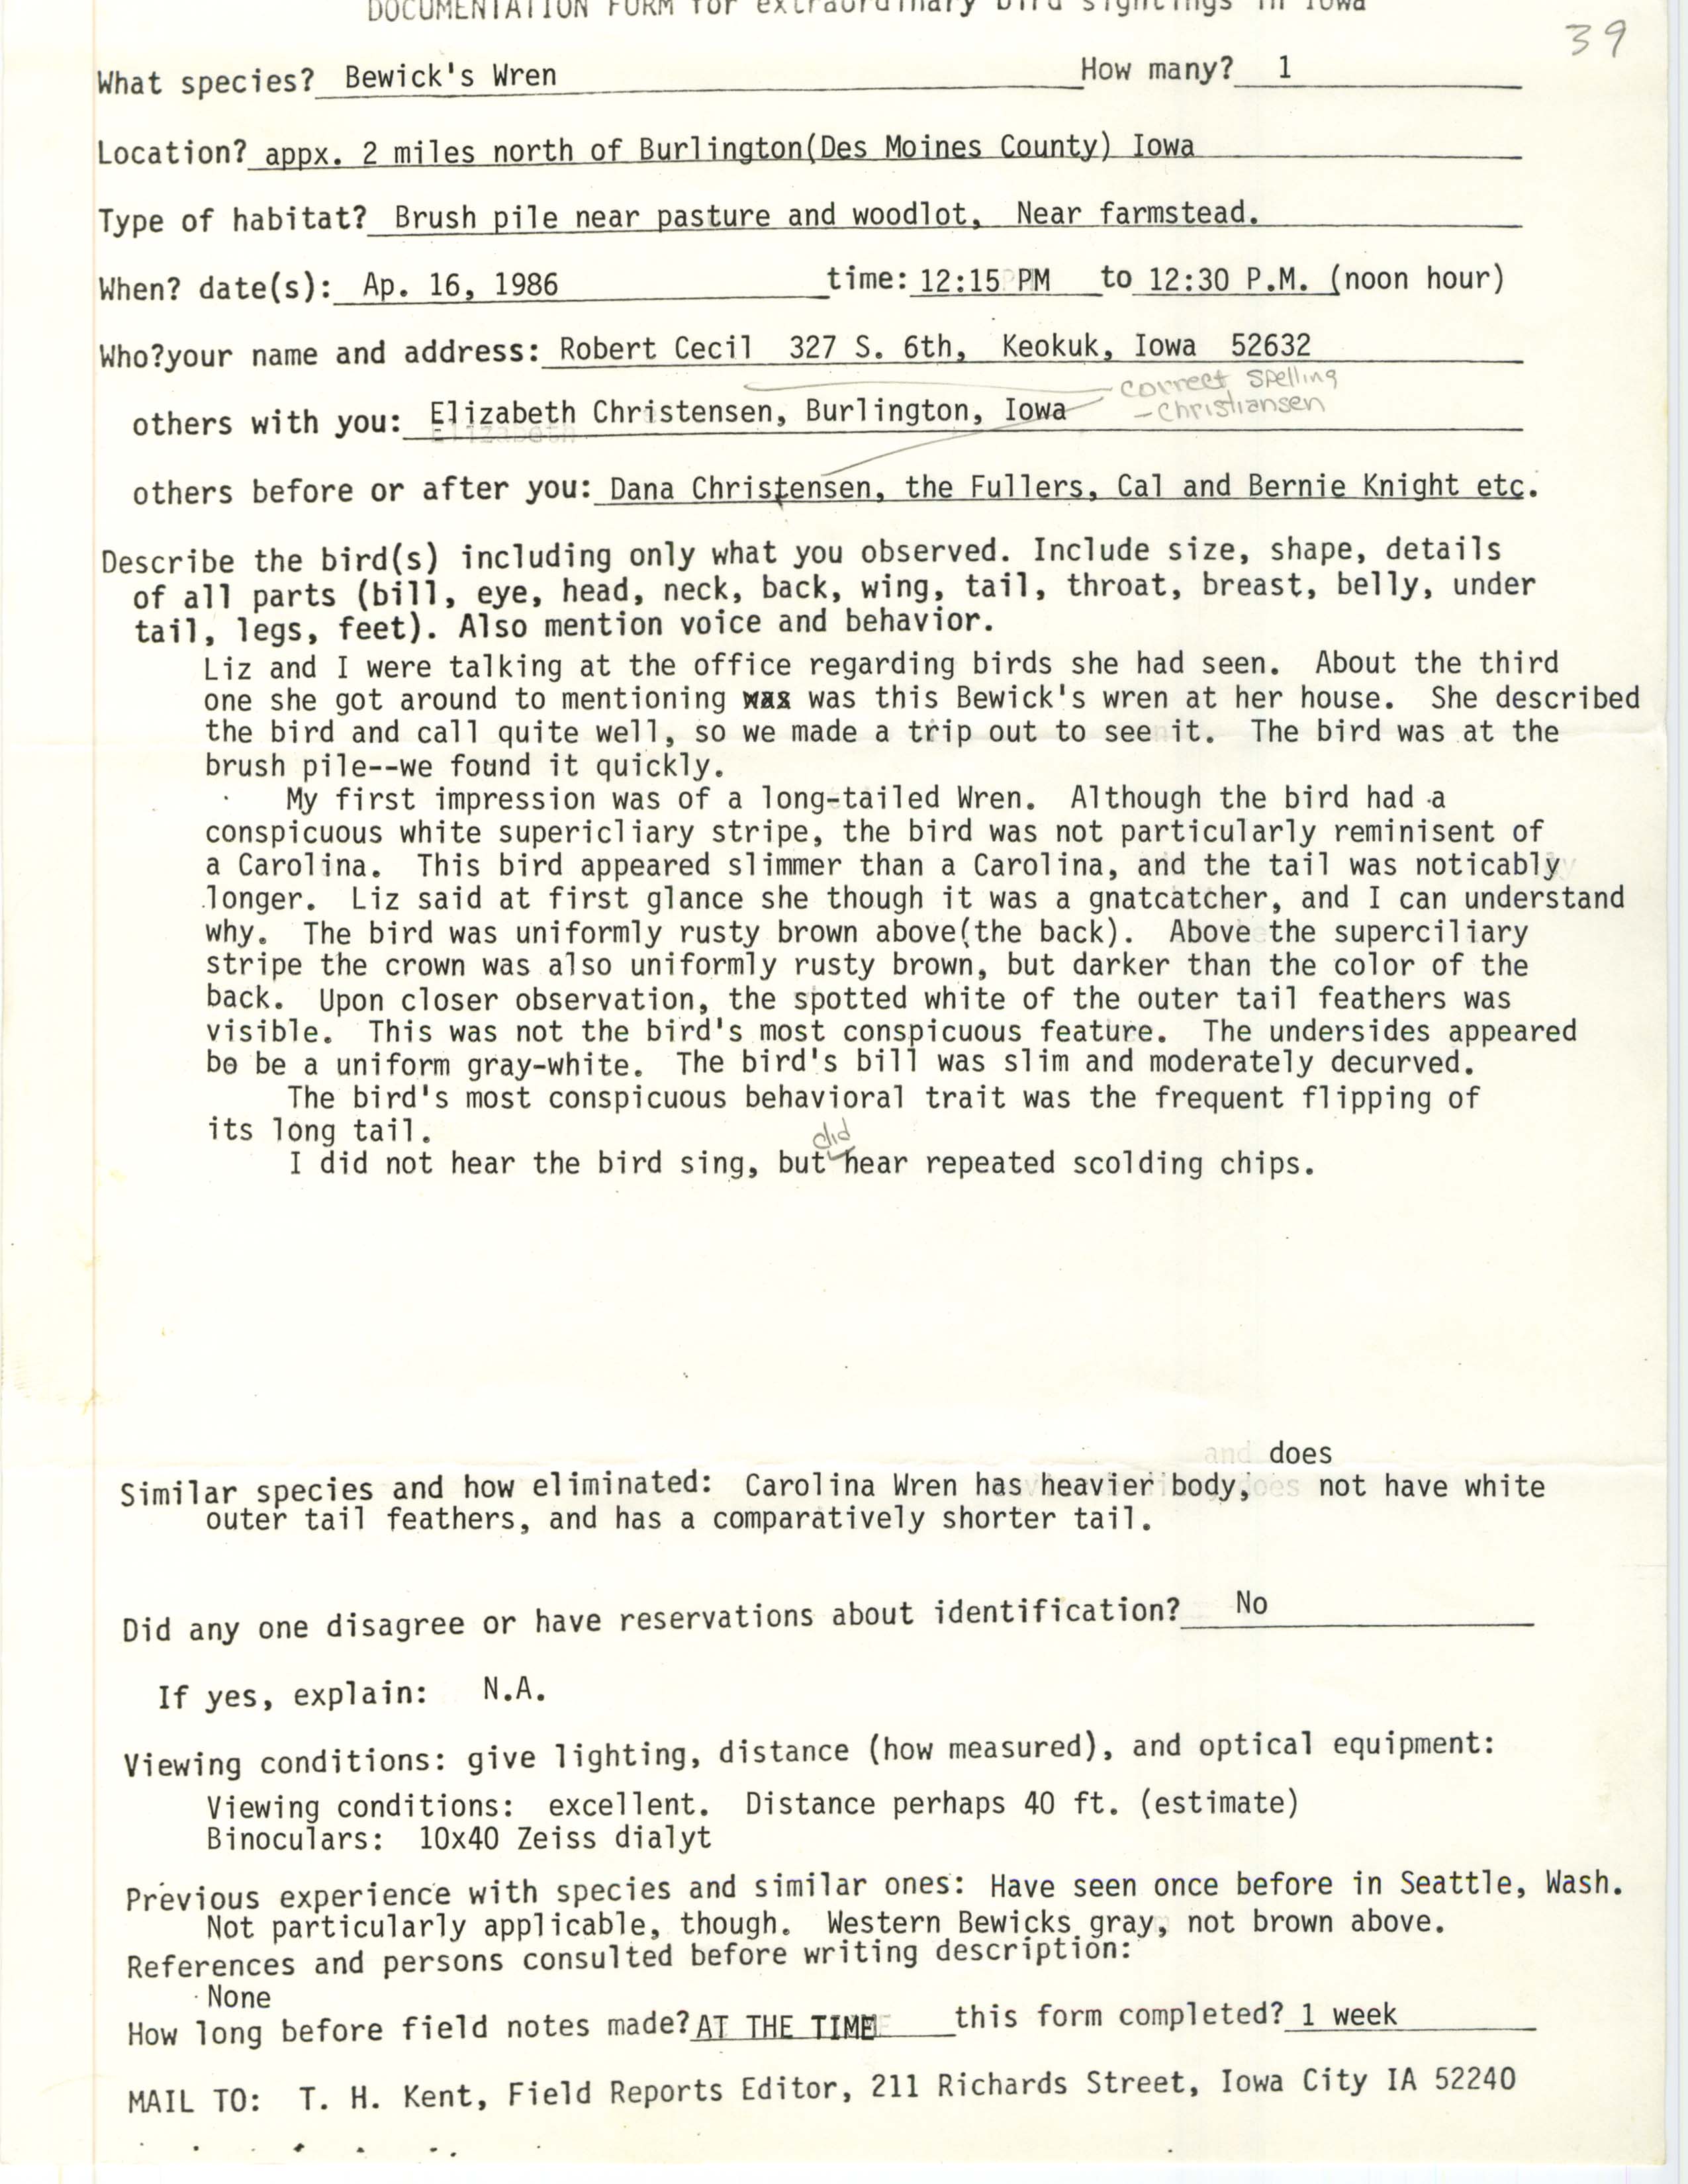 Rare bird documentation form for Bewick's Wren north of Burlington, 1986